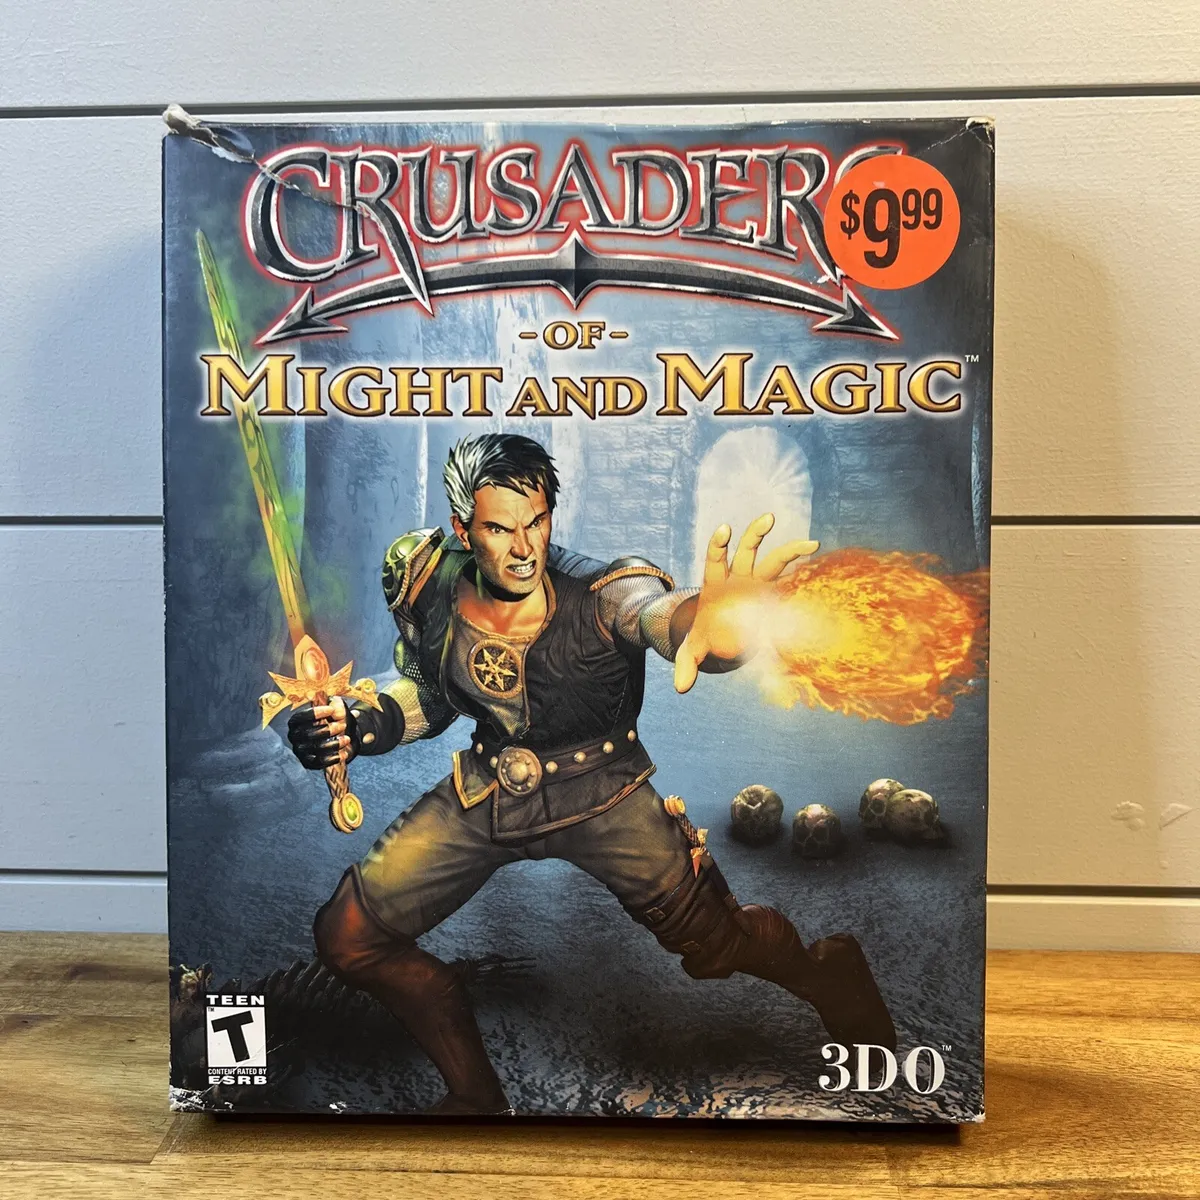 CRUSADERS OF MIGHT AND MAGIC 3DO PC CD-ROM WIN 95/98 BIG BOX PC